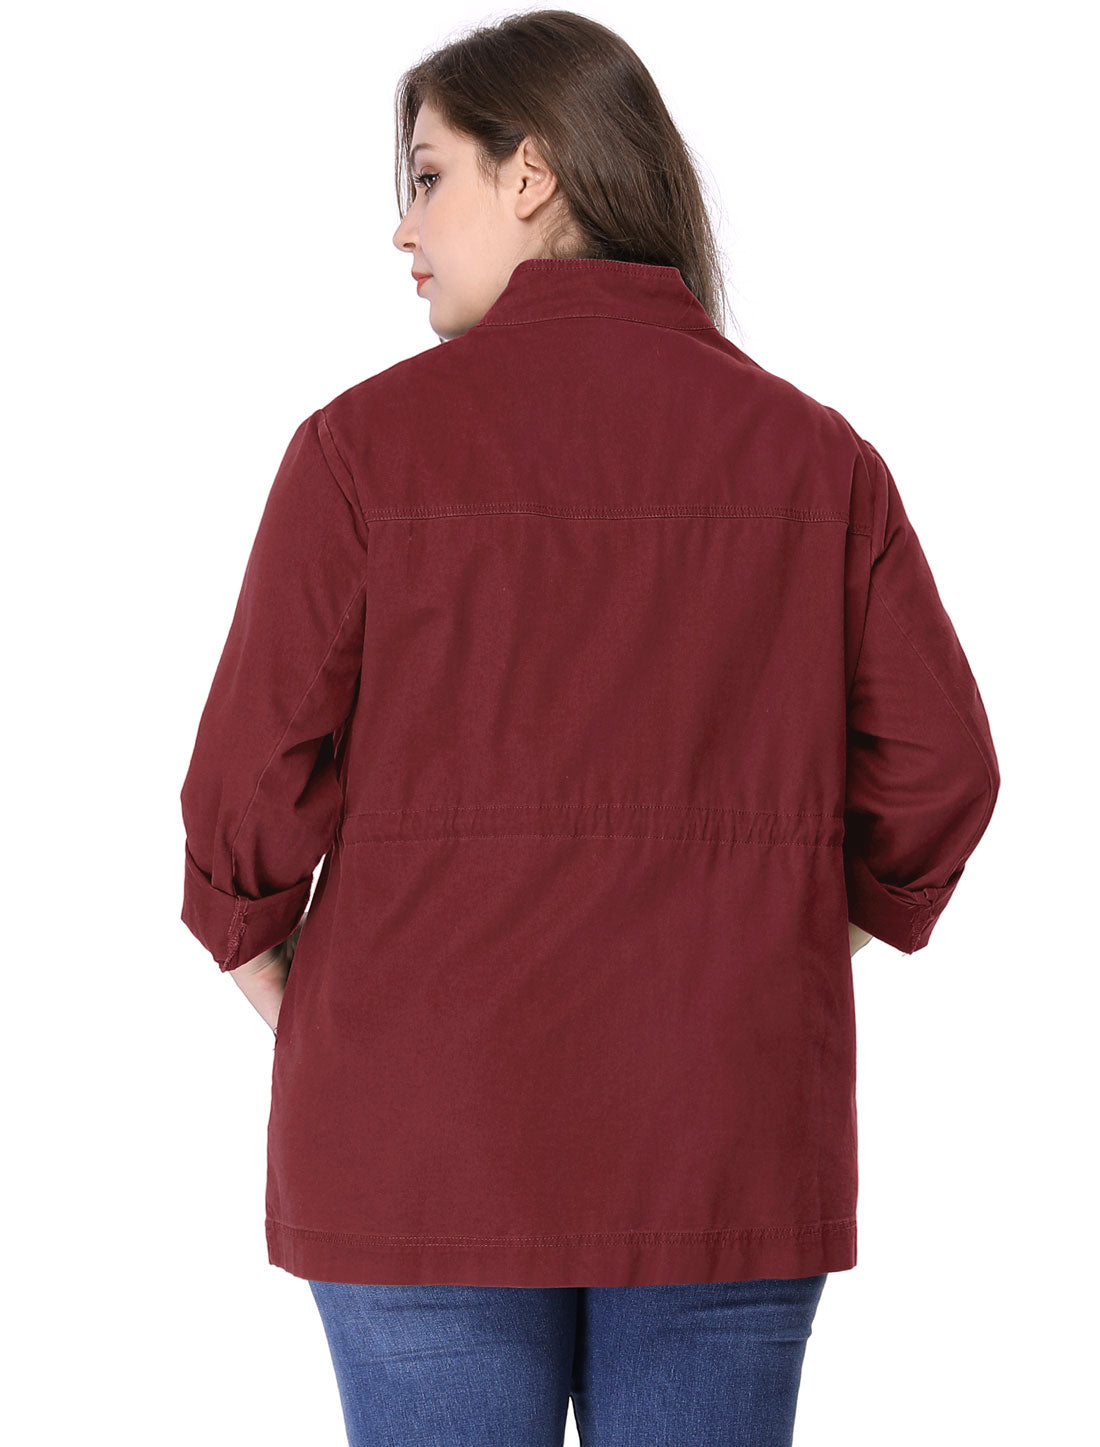 Bublédon Women's Plus Size Stand Collar Drawstring Utility Jacket